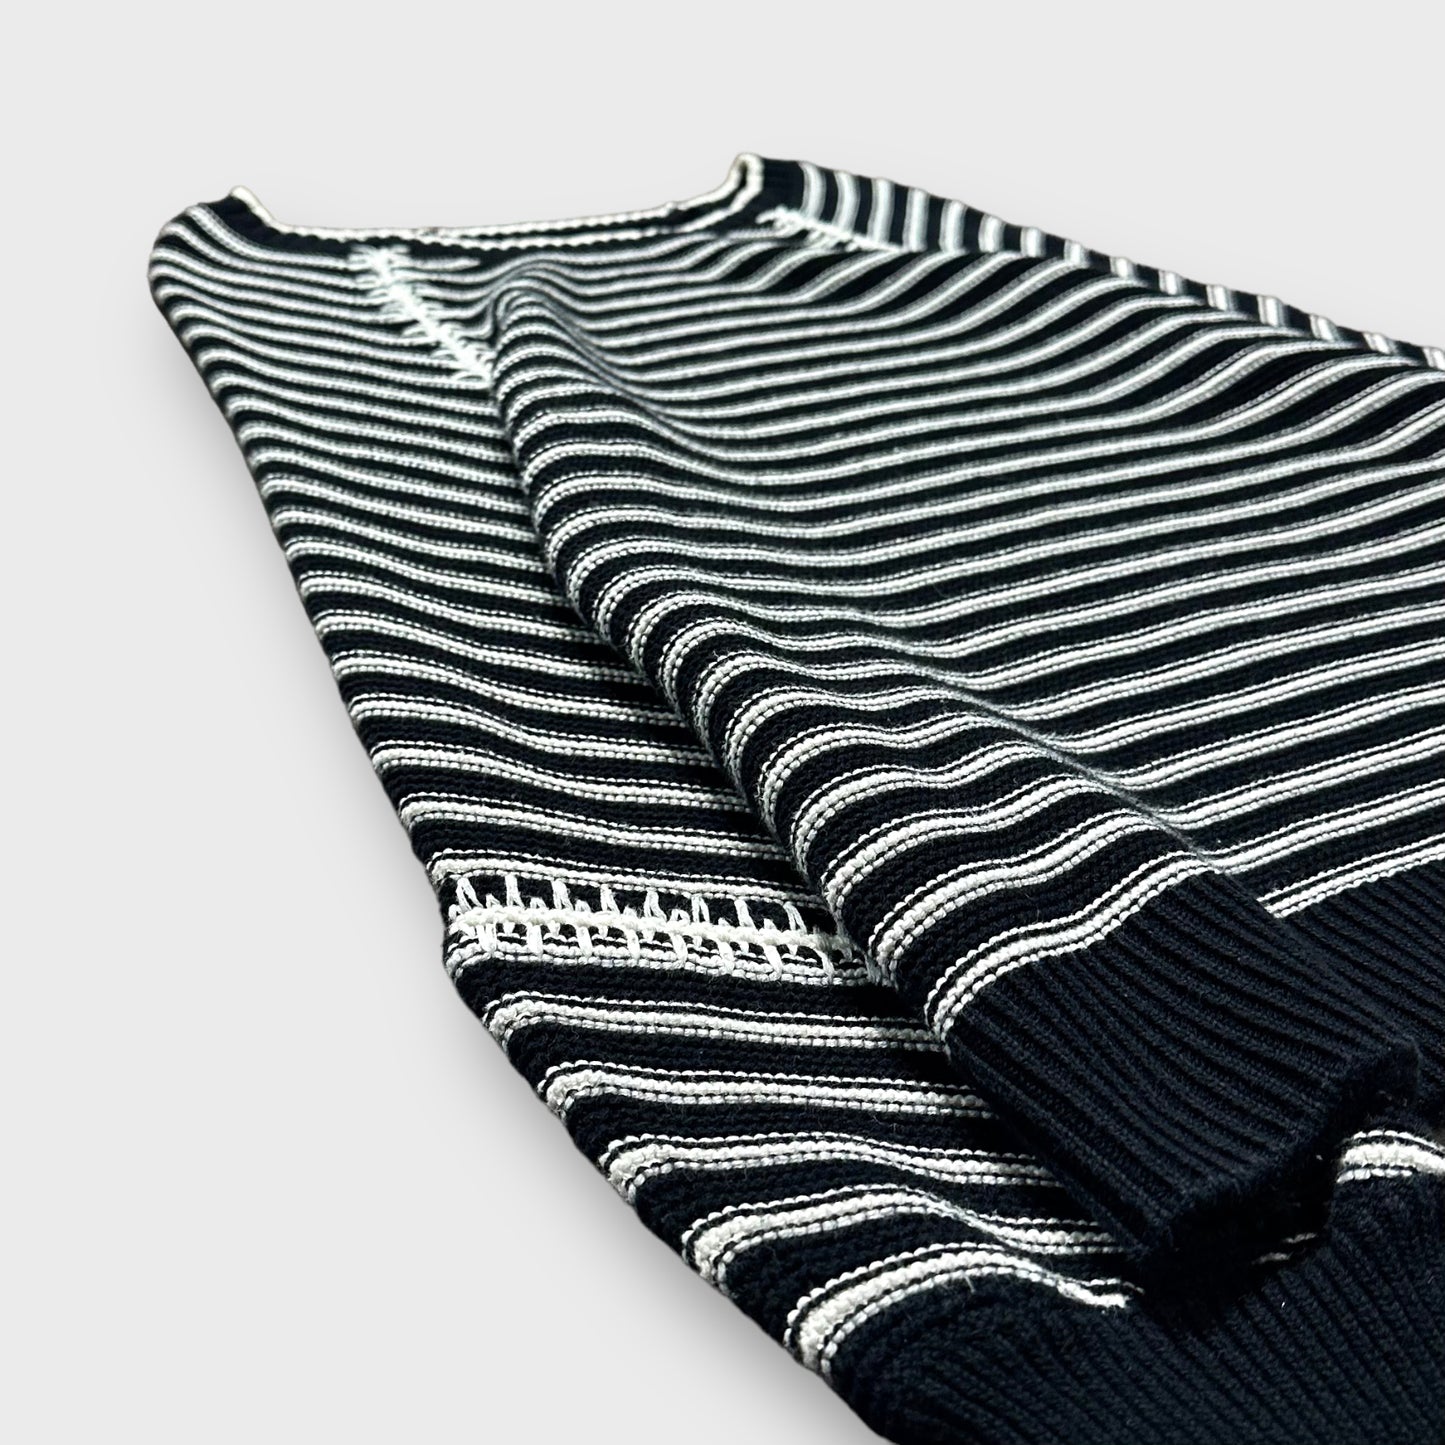 Design border pattern knit sweater